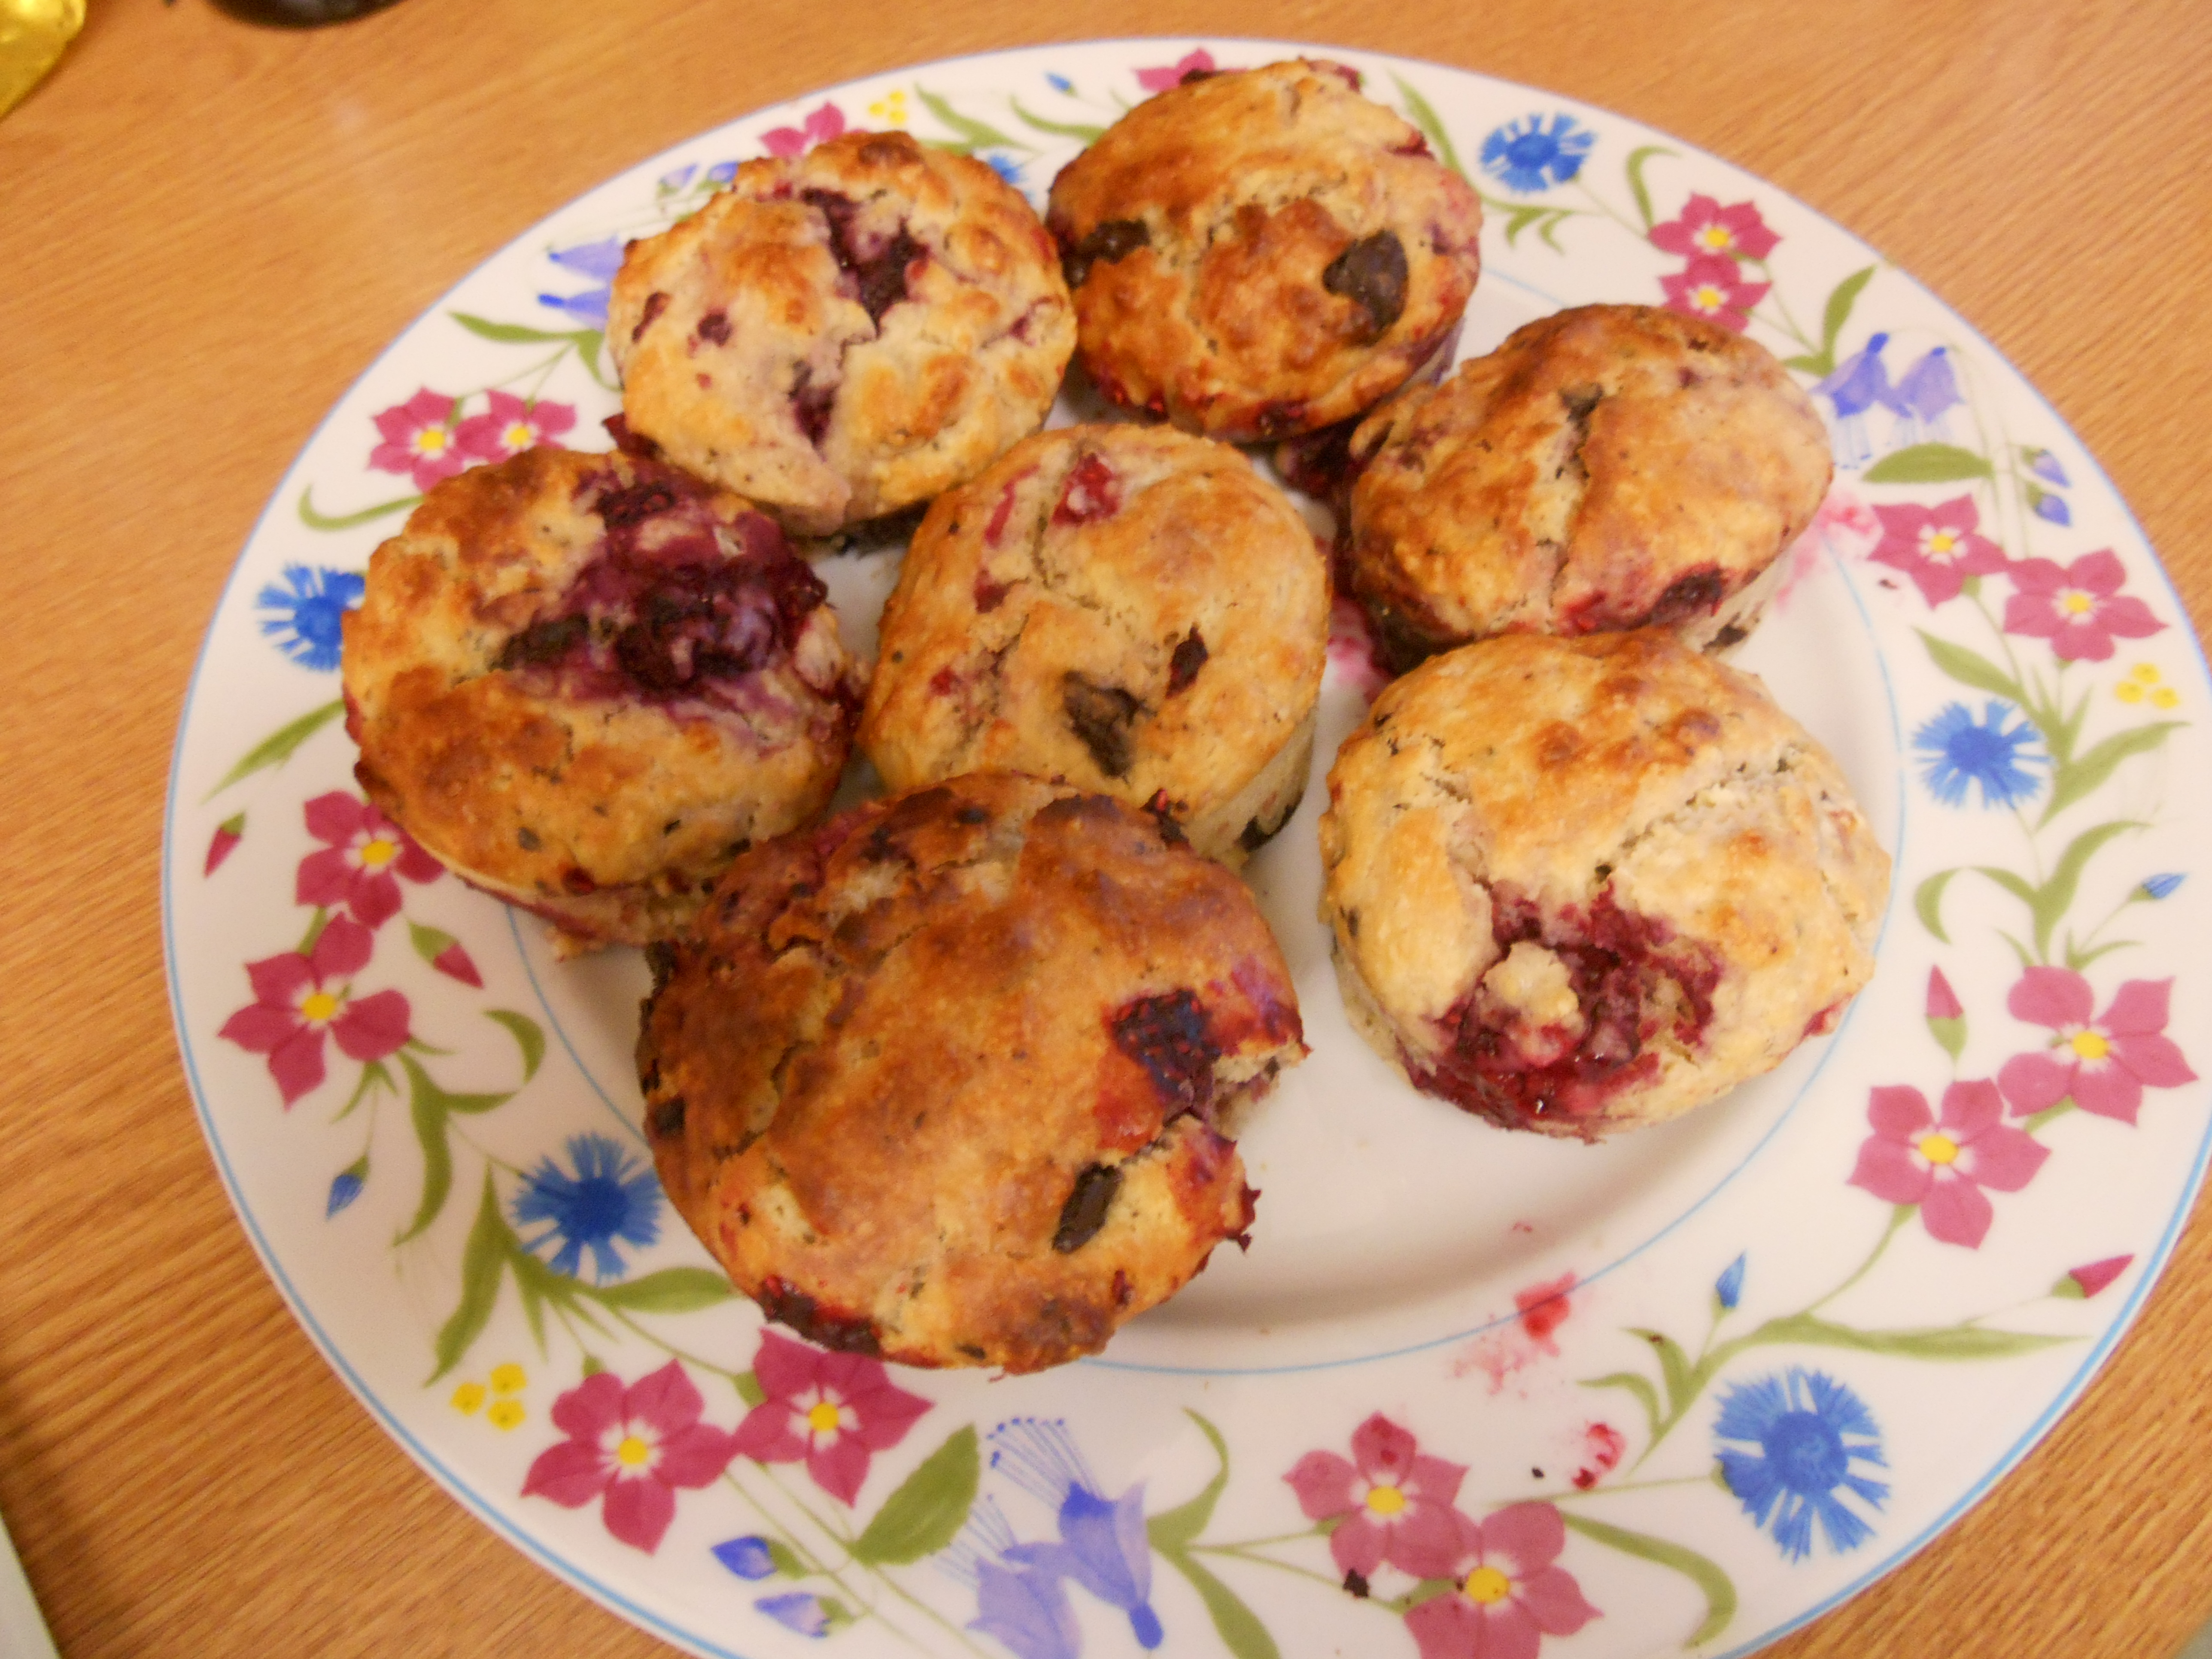 Muffins - not my prettiest baking creation but still quite yummy. 